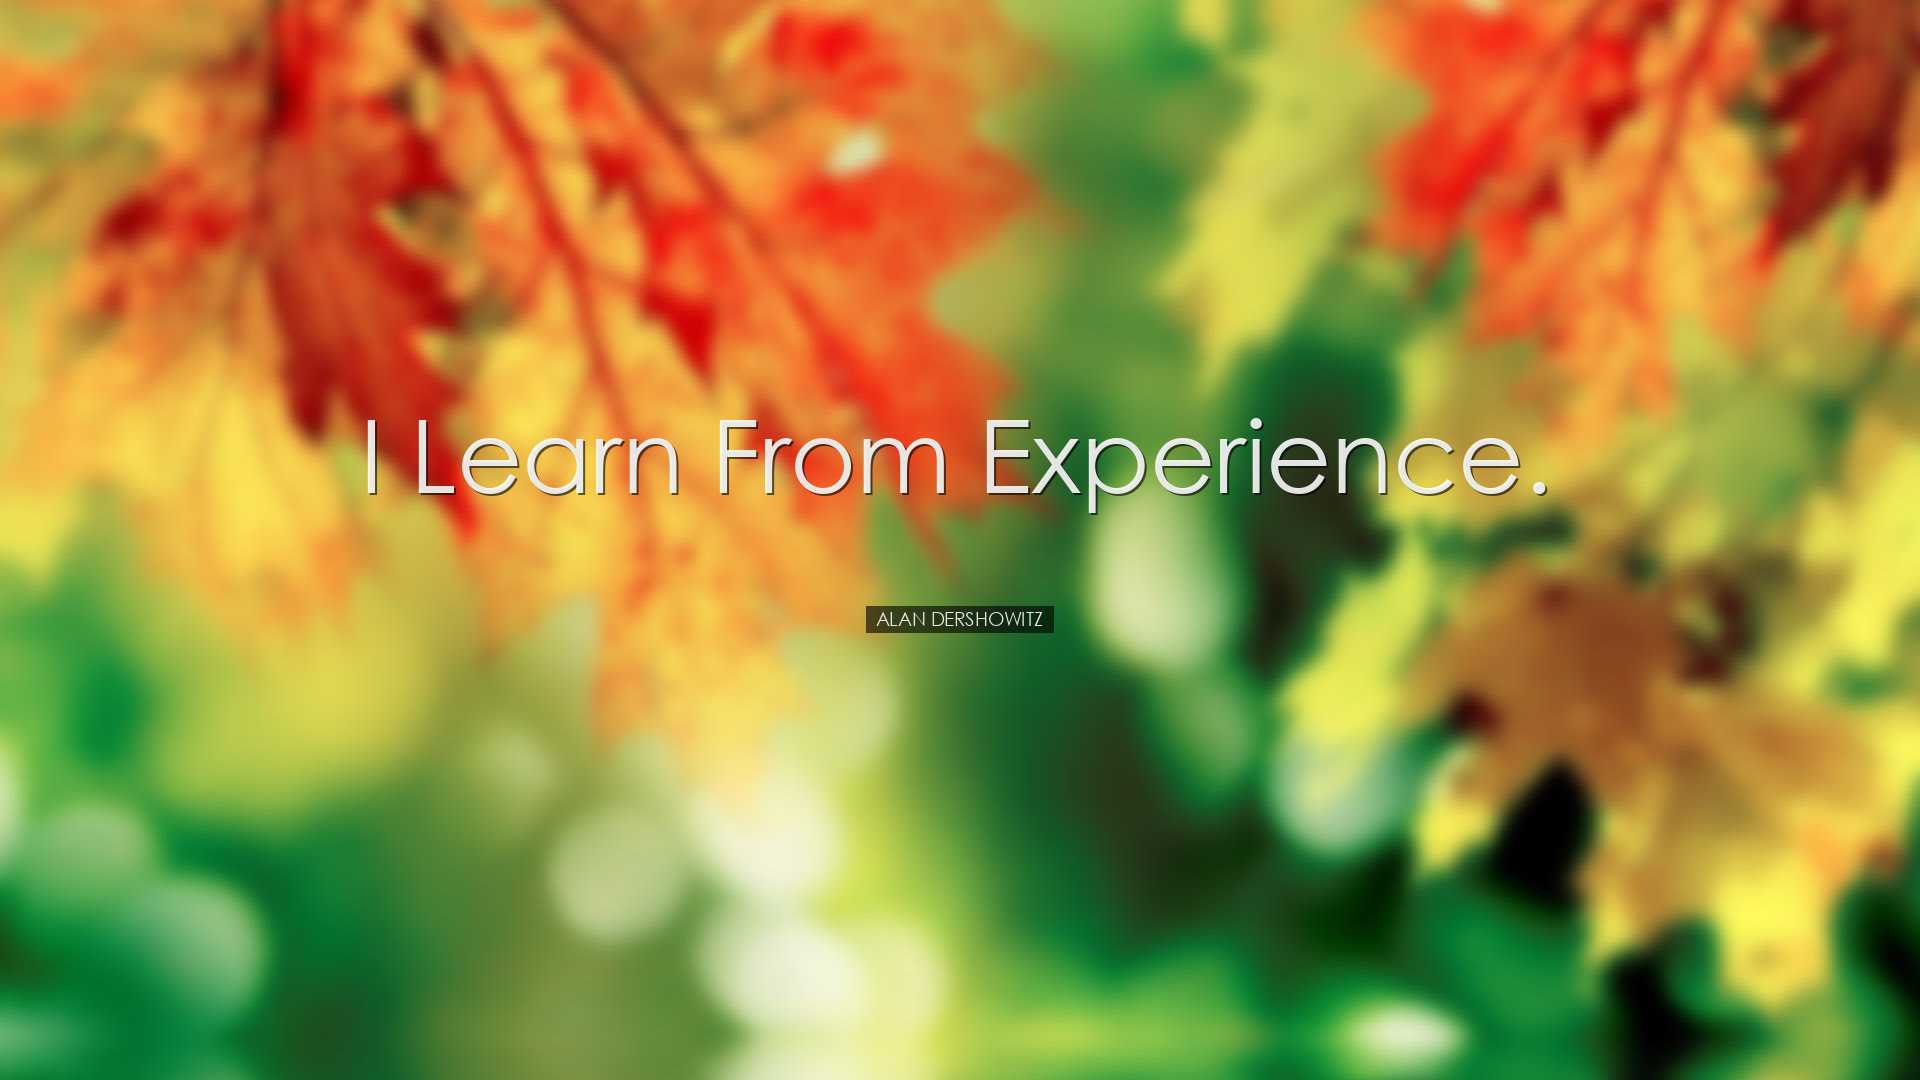 I learn from experience. - Alan Dershowitz